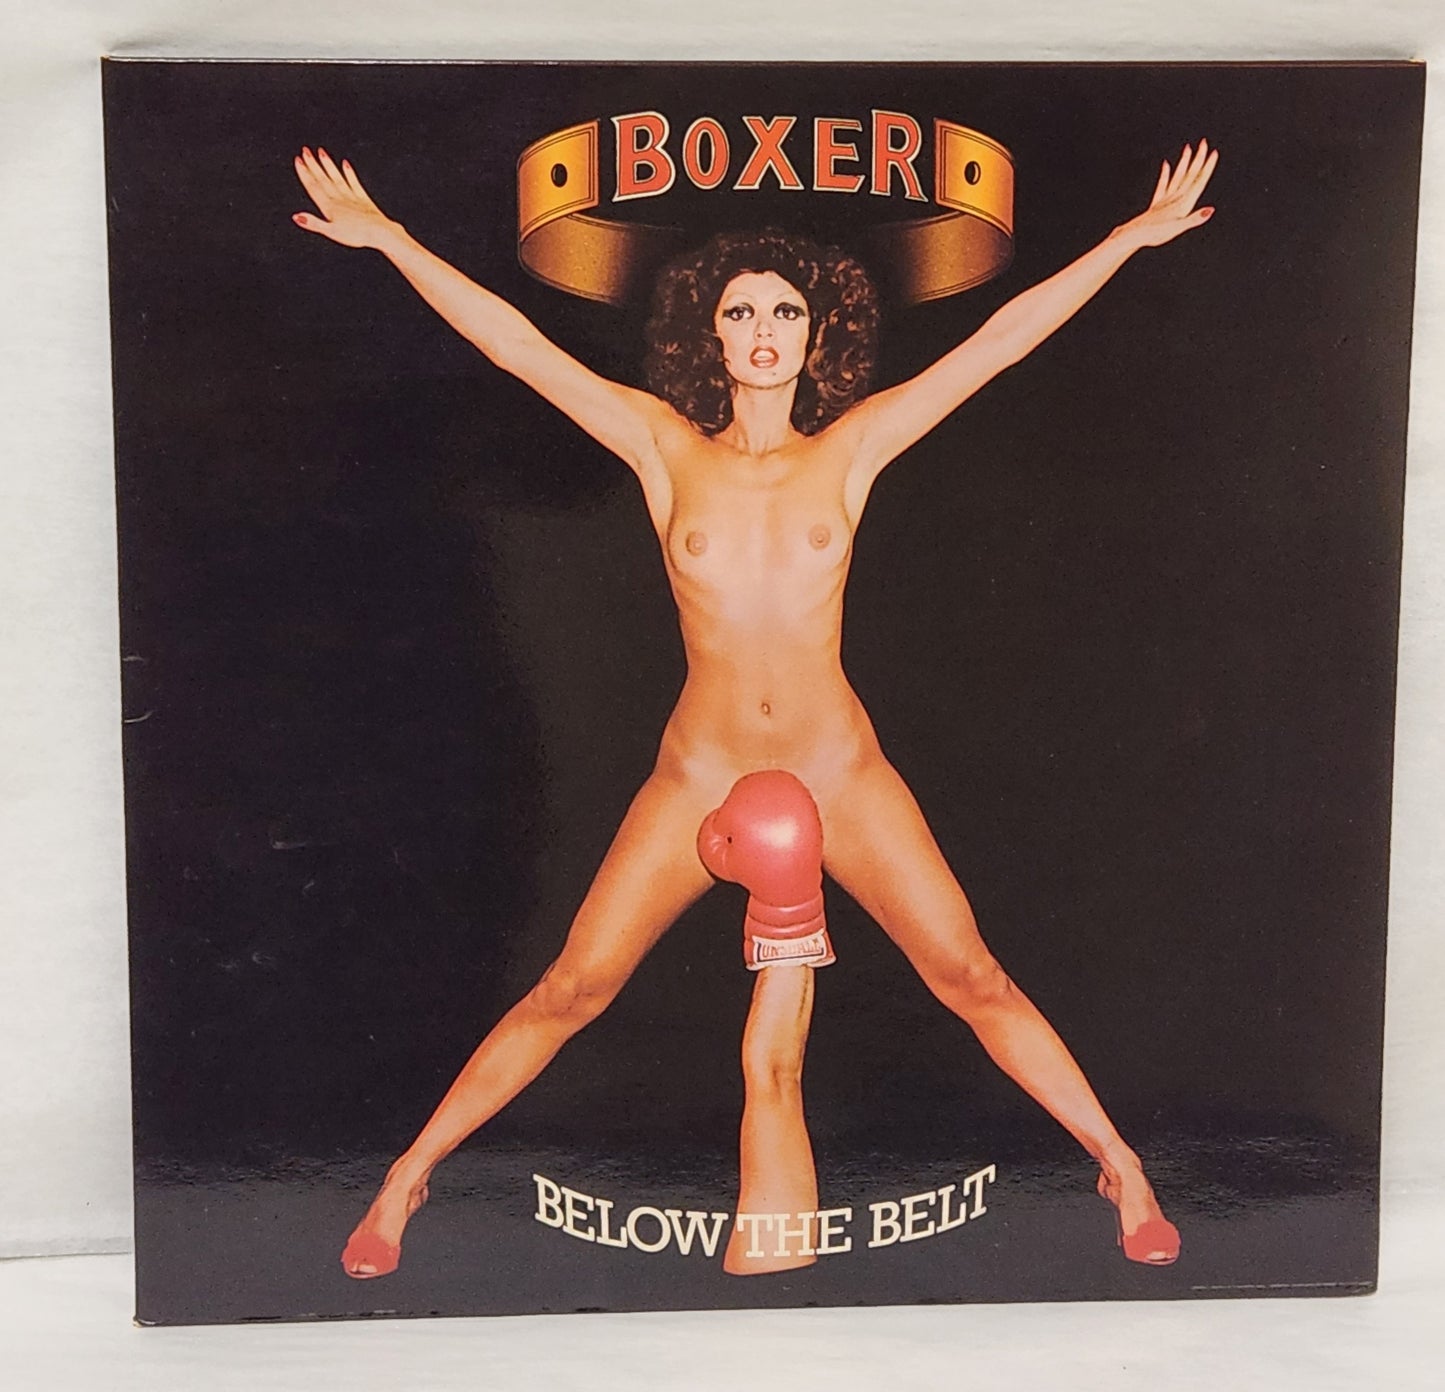 Boxer "Below The Belt" 1975 Classic Rock (UK Uncensored Pressing) Record Album